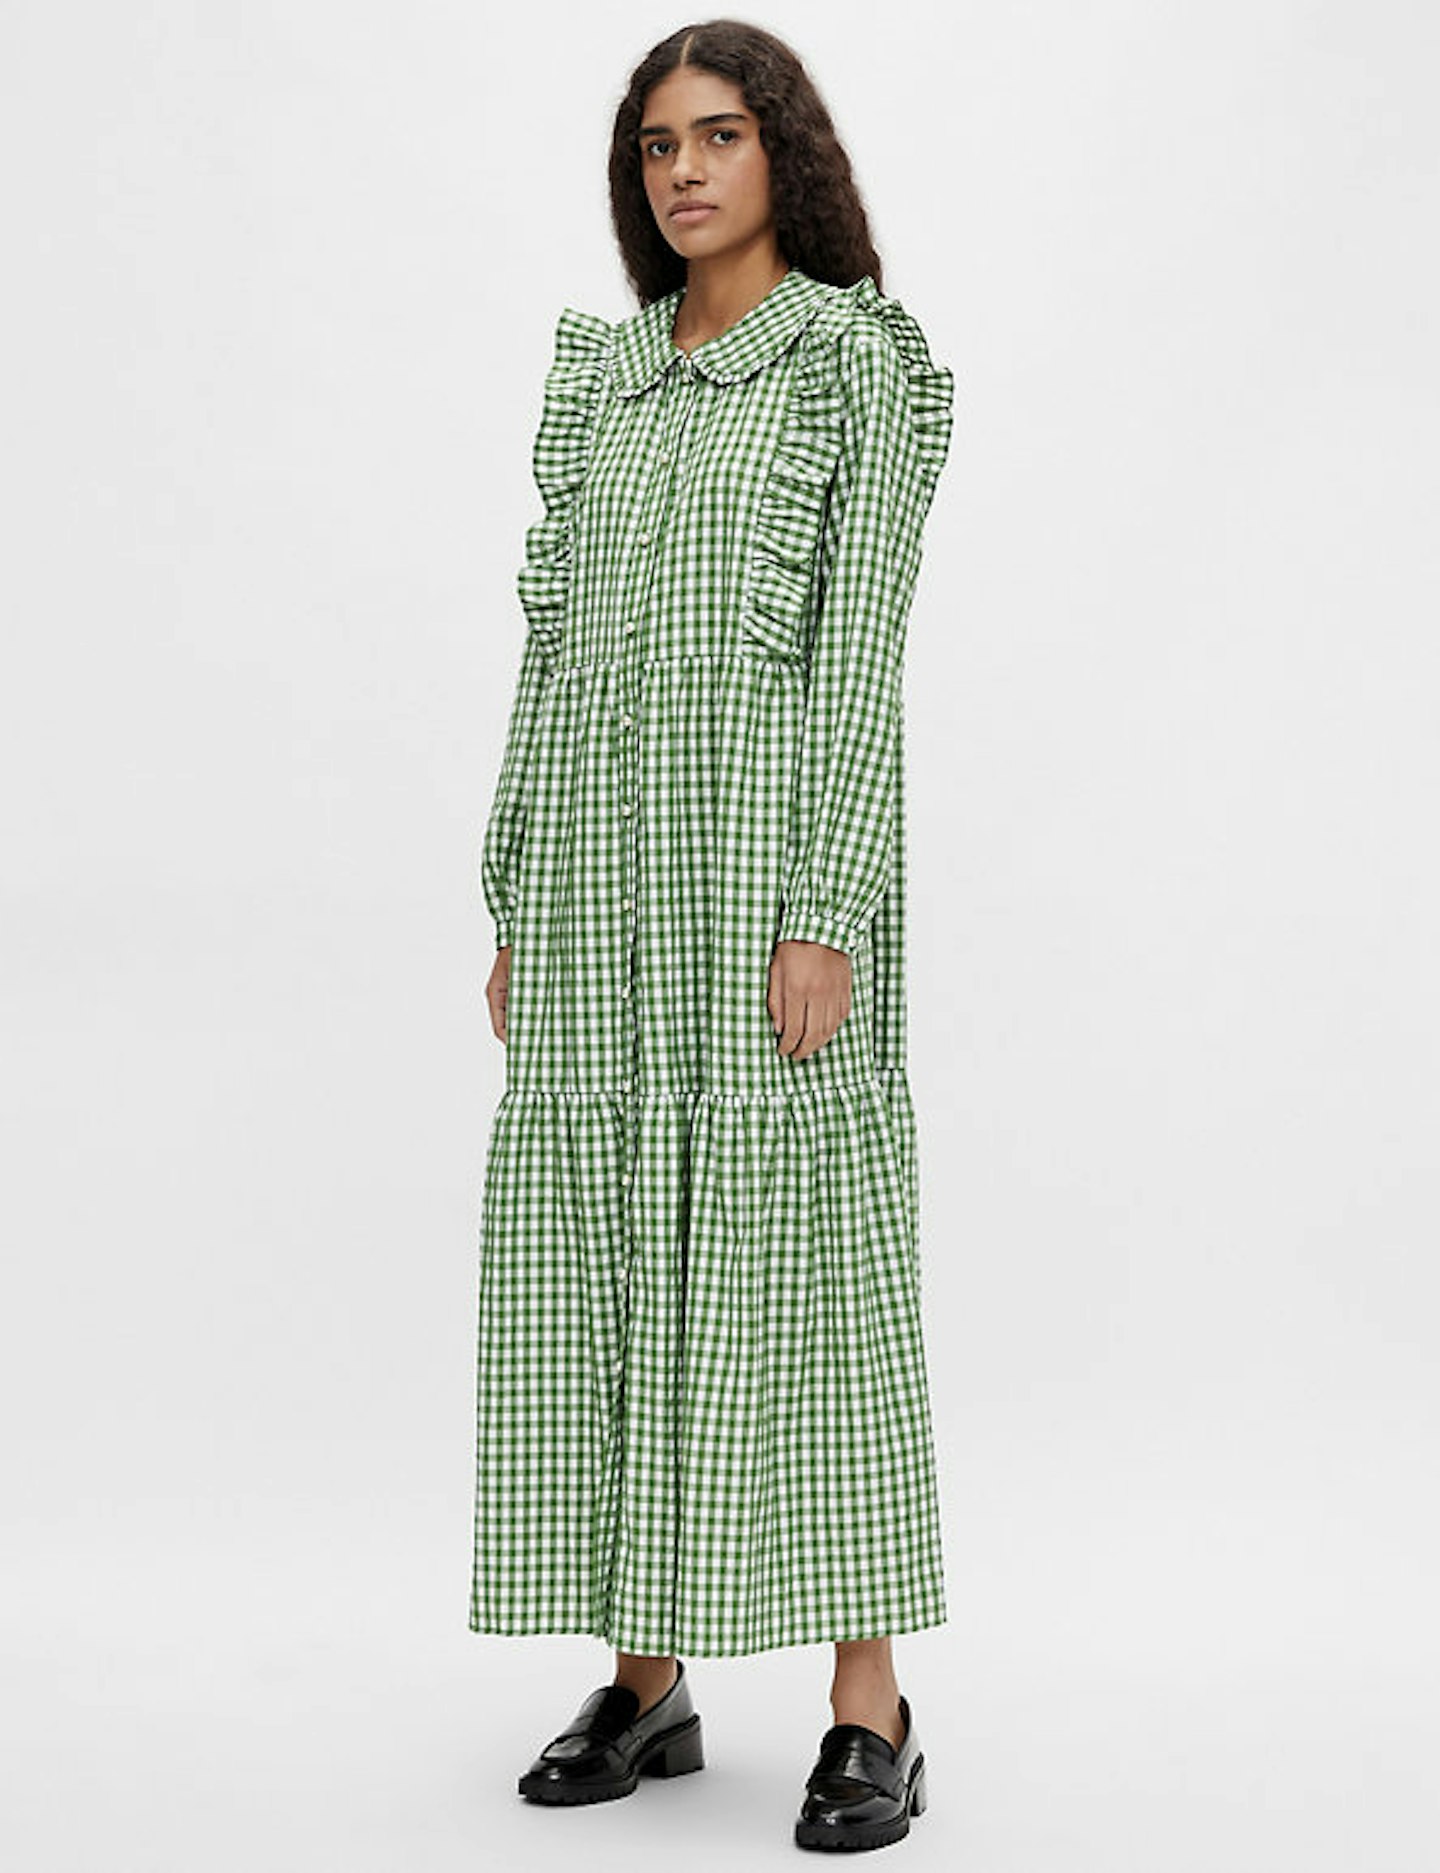 M&S, Object Gingham Midaxi Shirt Dress, £60